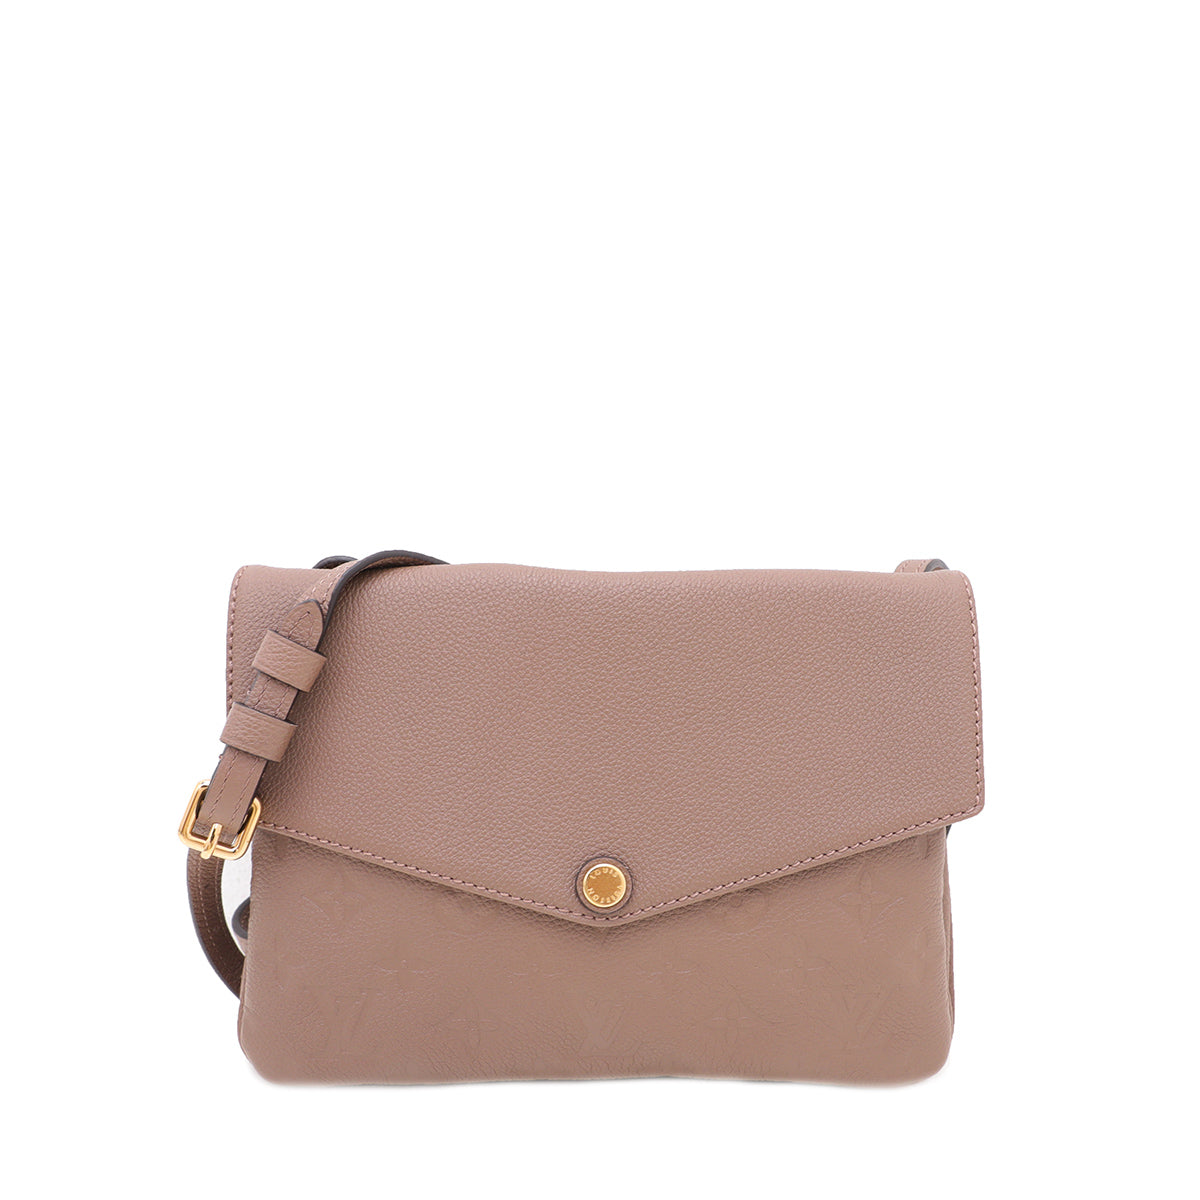 Louis Vuitton Twice Handbag